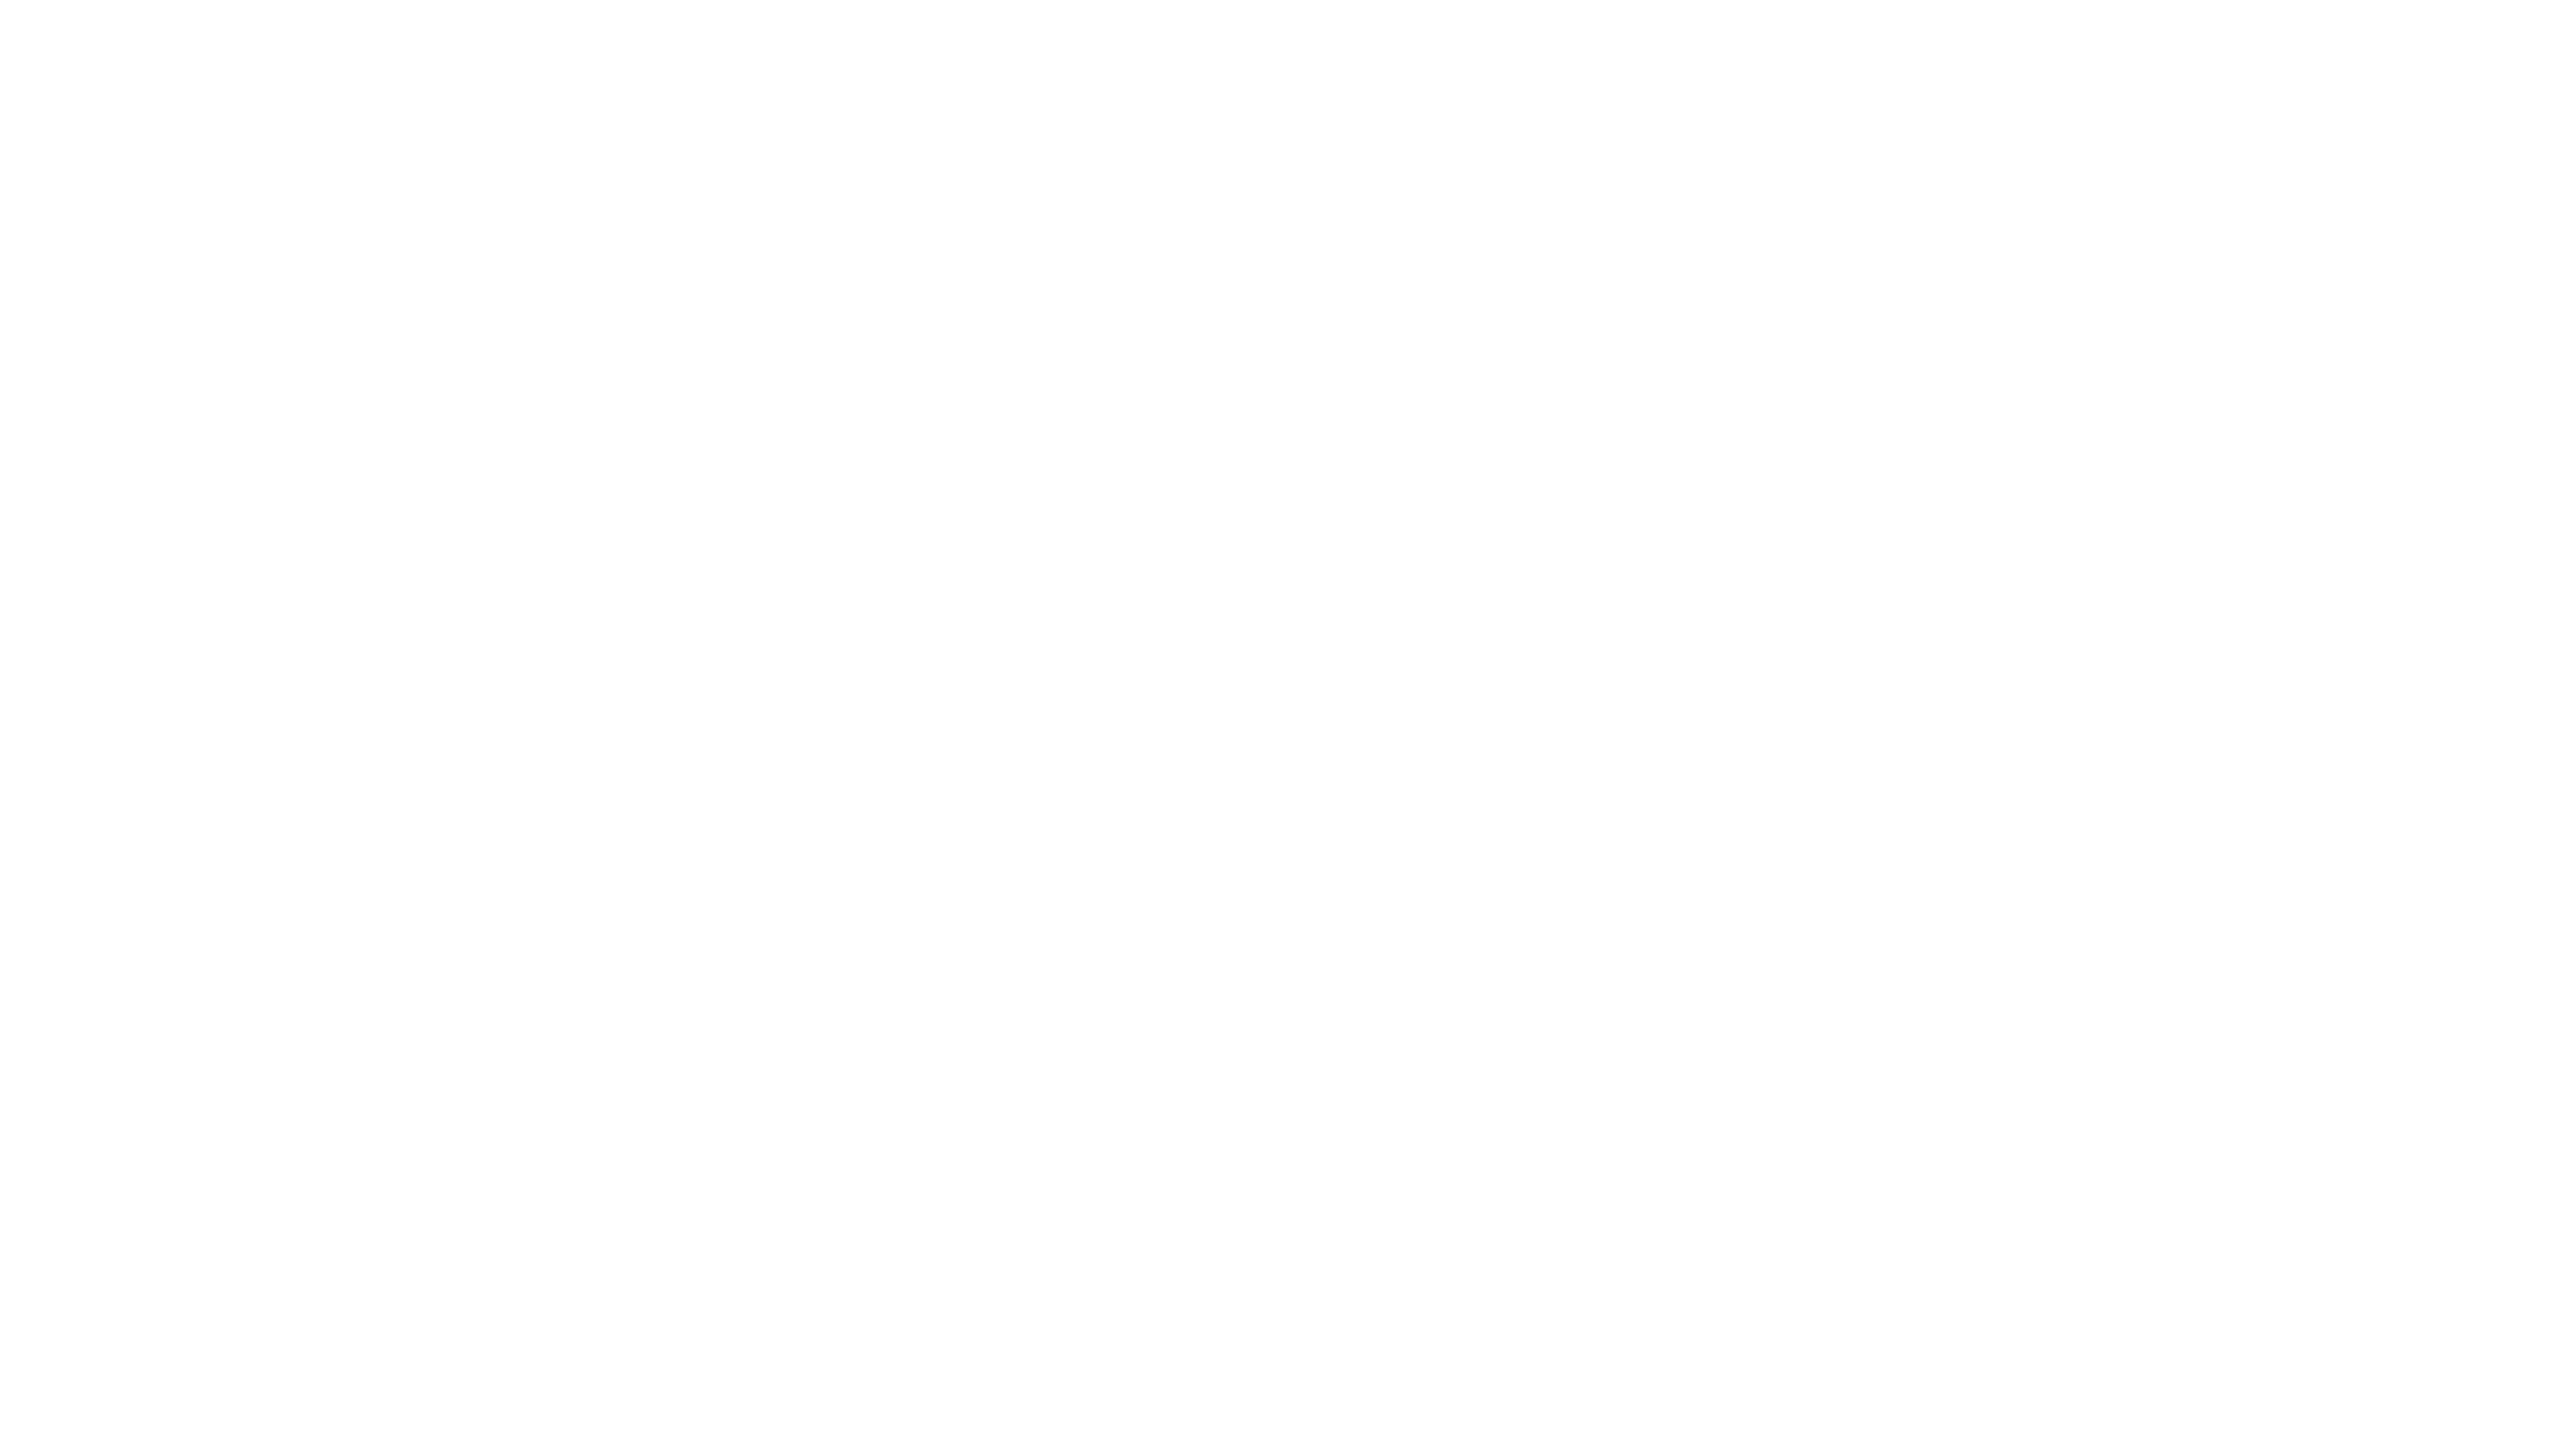 Standard Life logo white